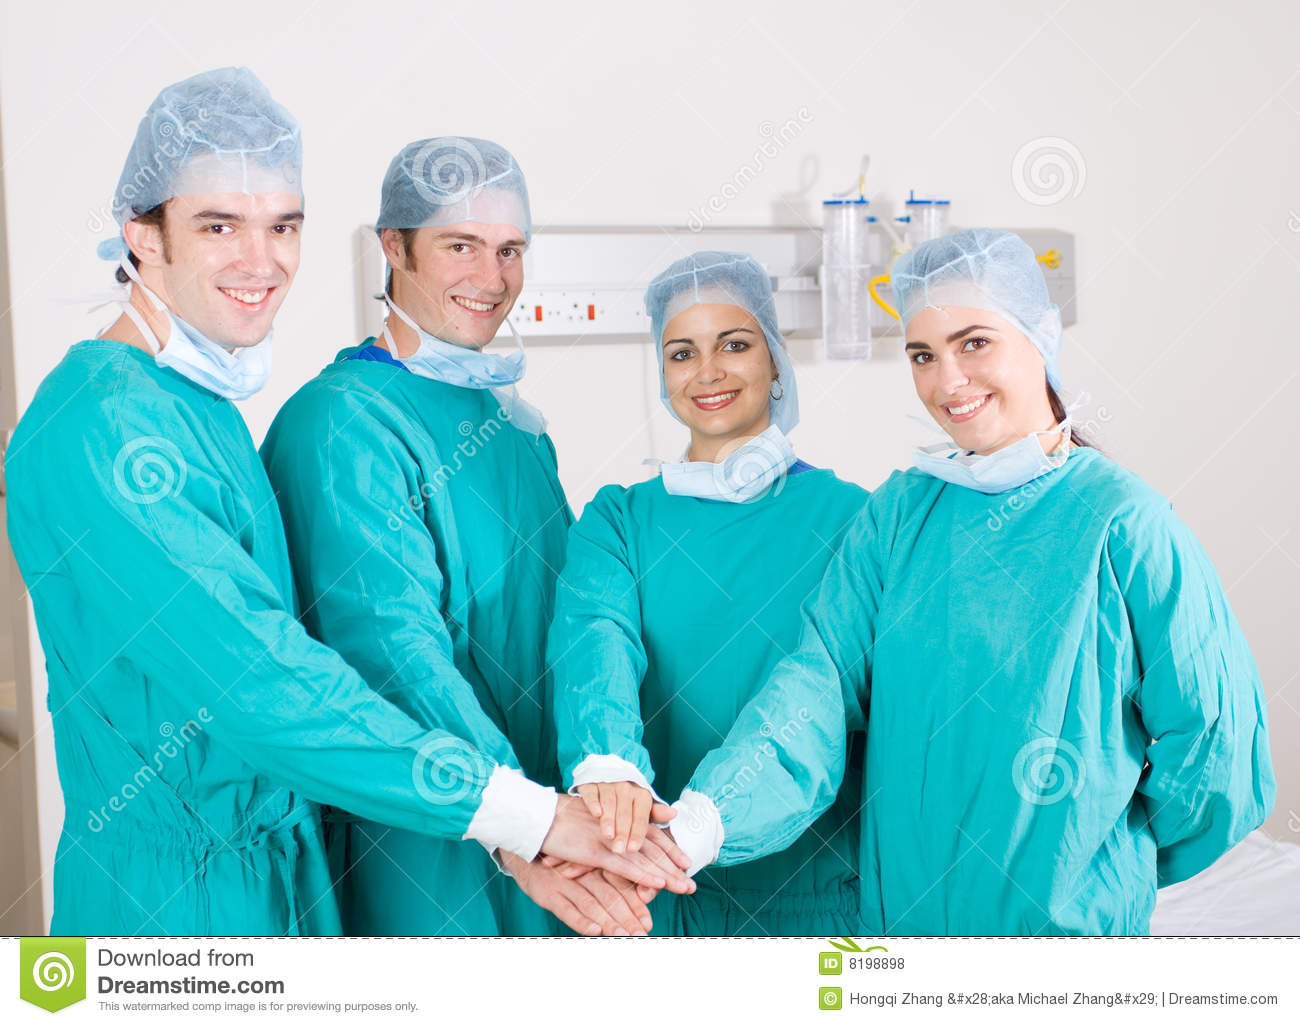 Medical Doctors With Hands Together To Form A Medical Teamwork